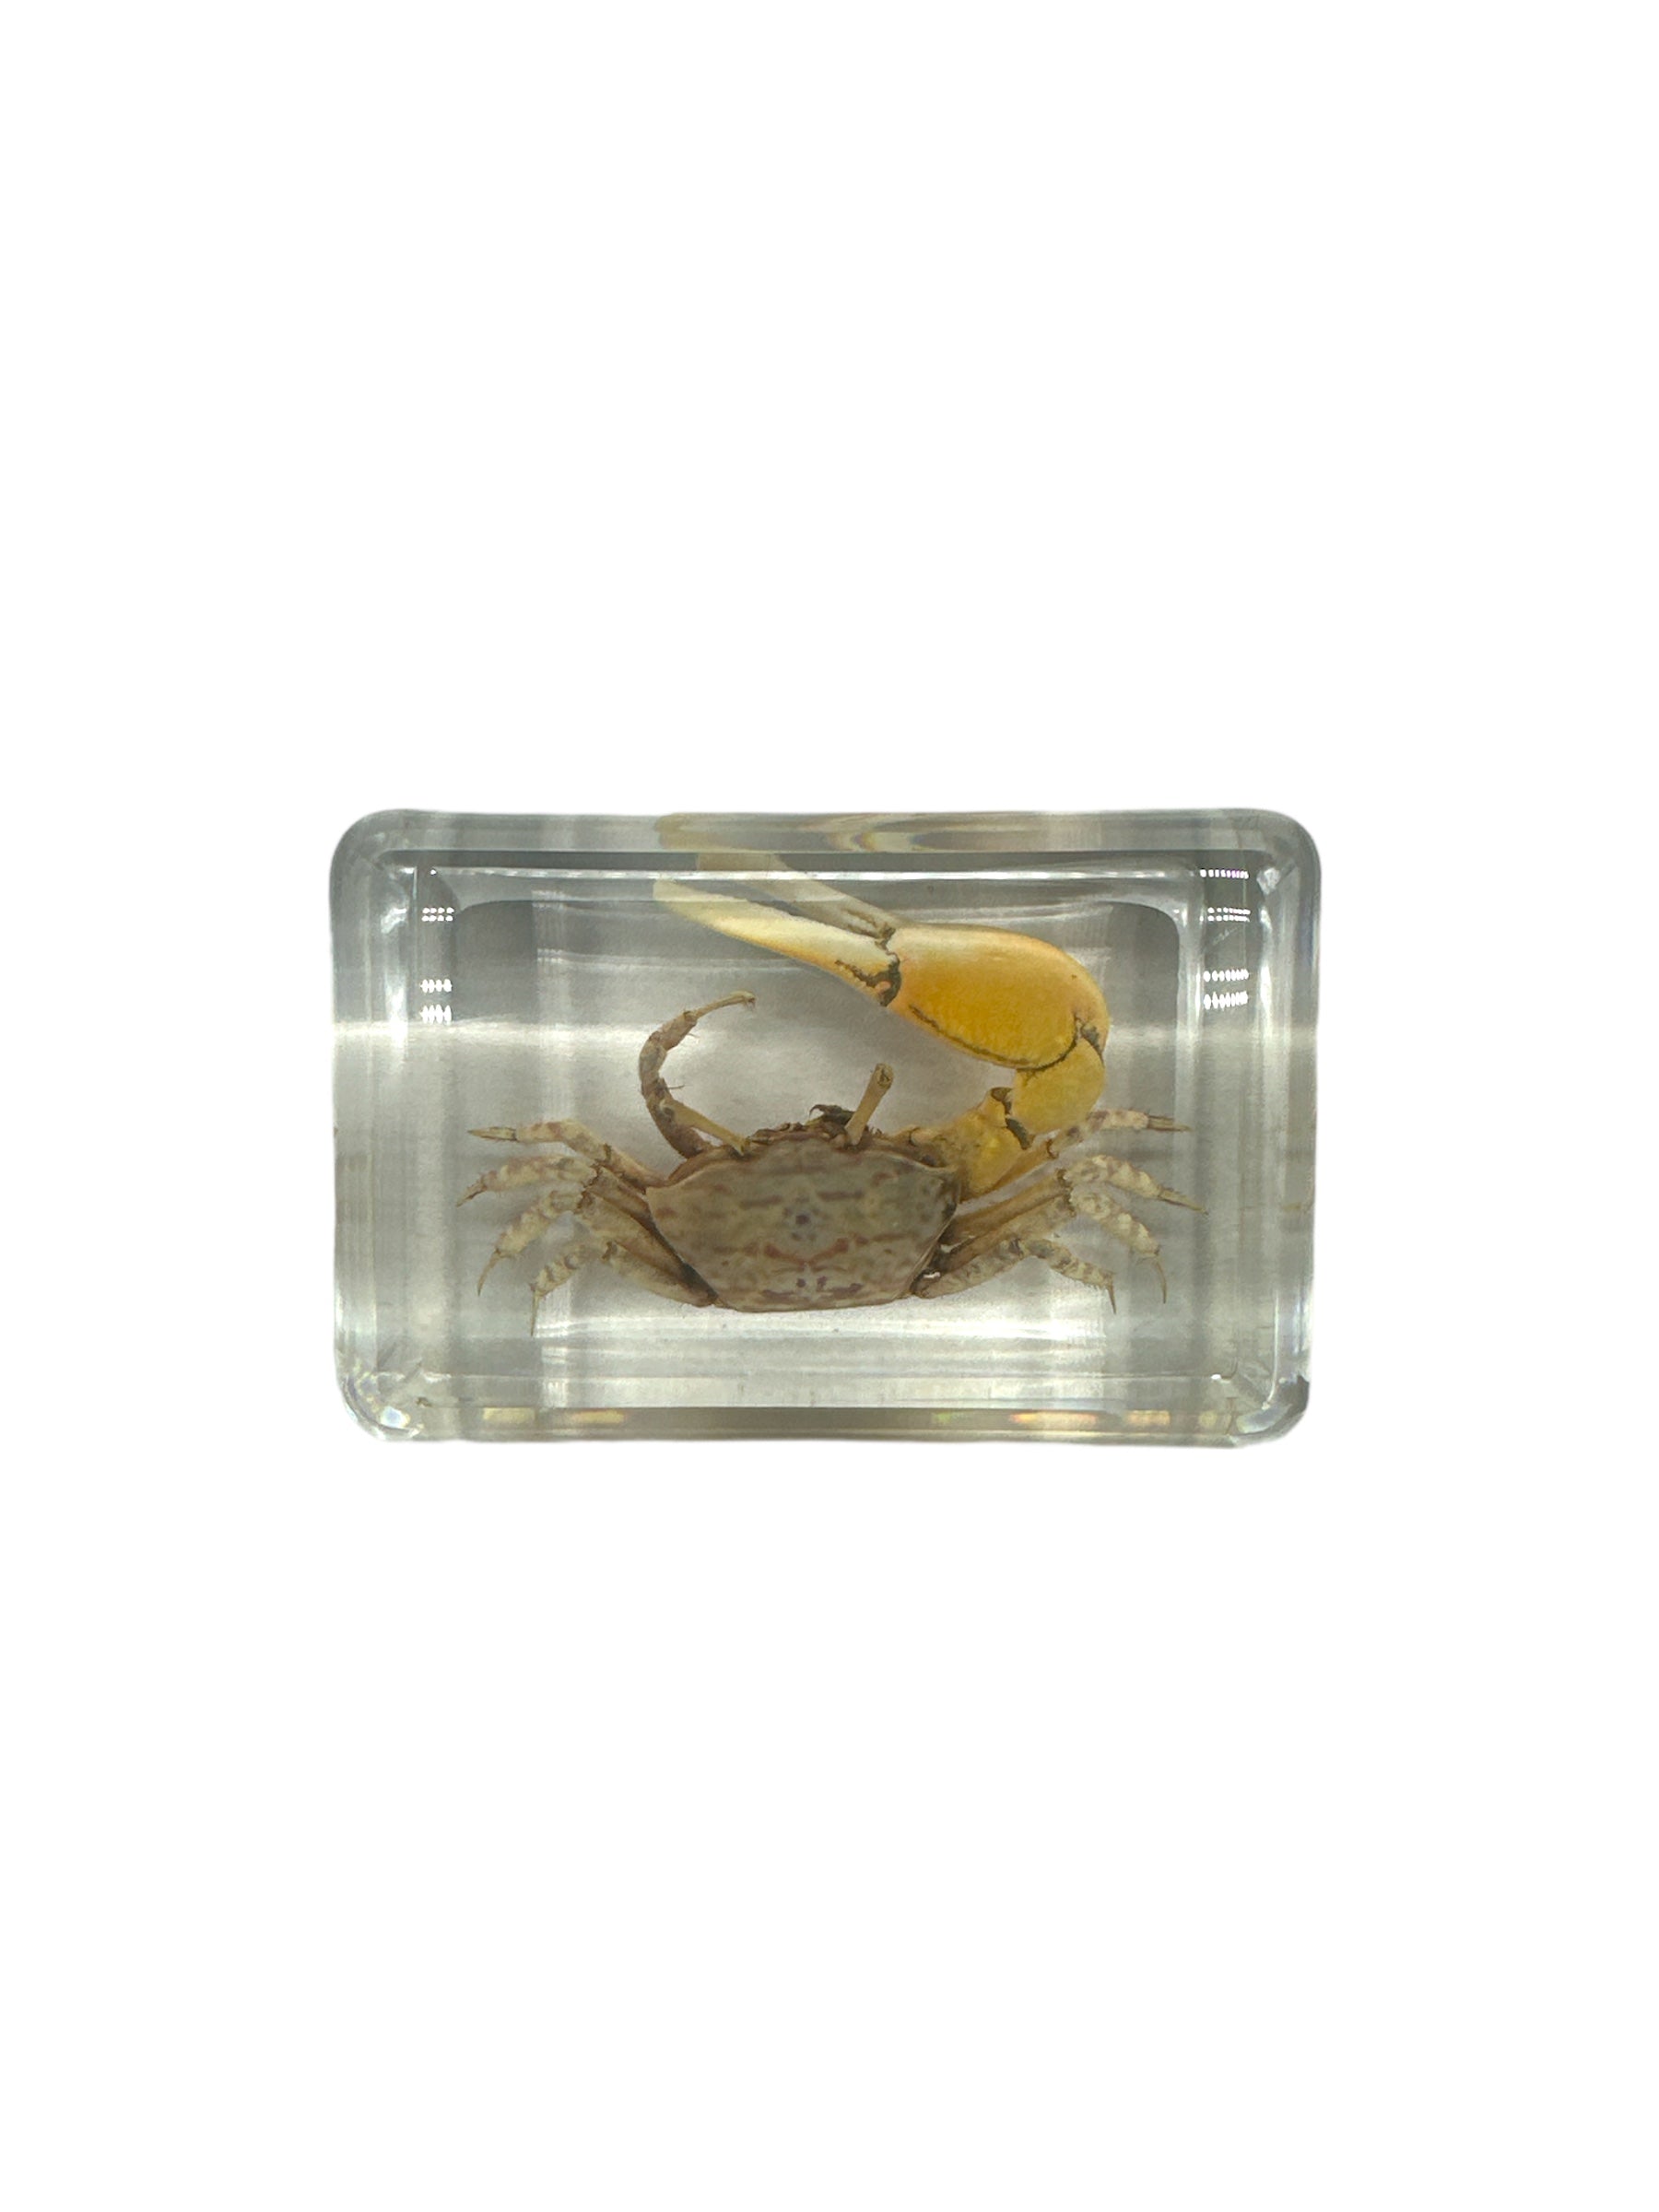 Fiddler Crab - Specimen In Resin